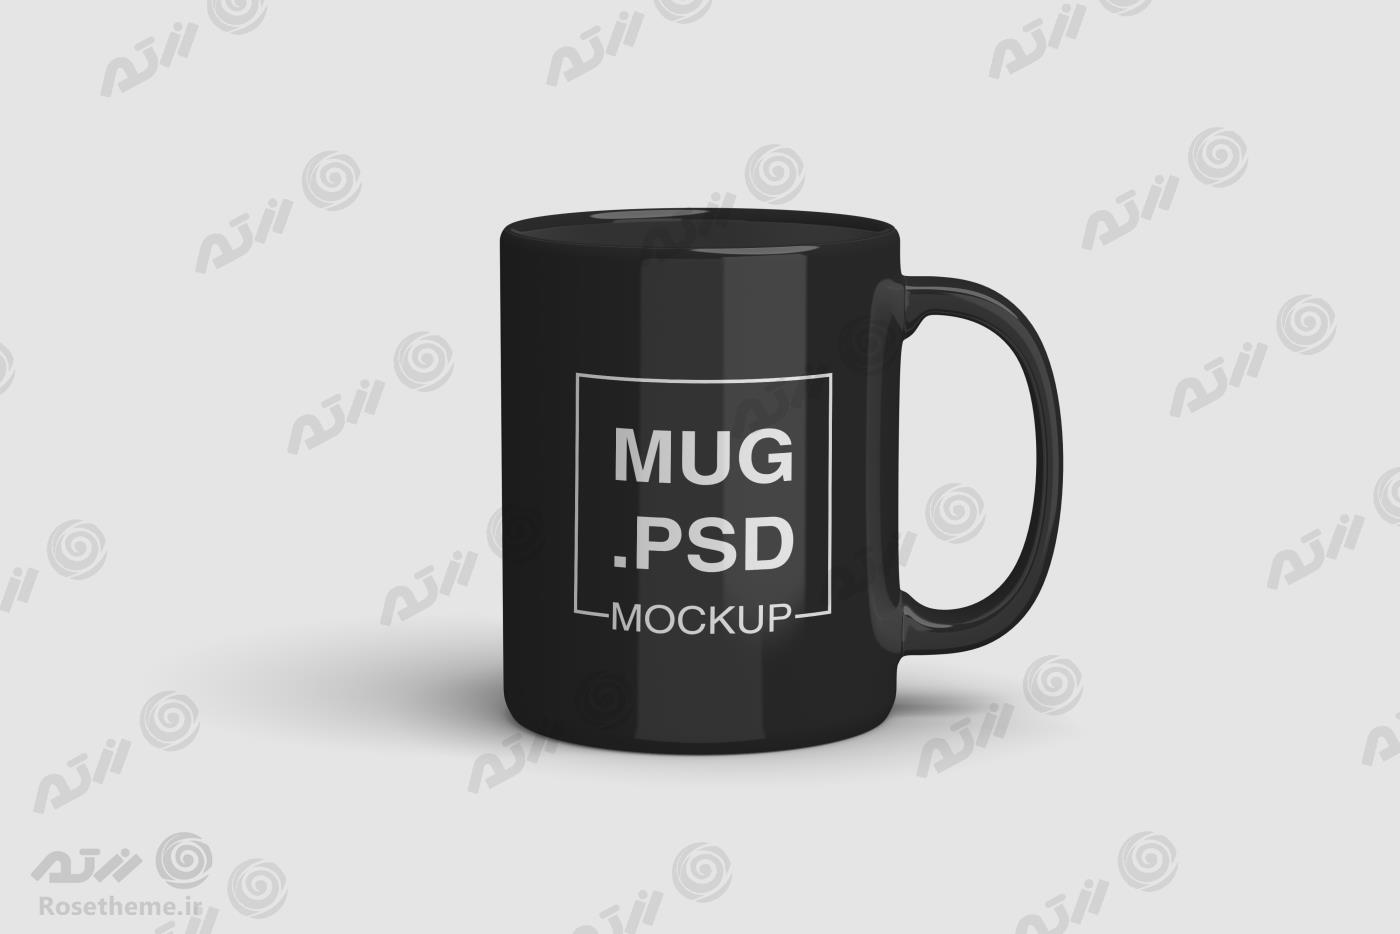 موکاپ فتوشاپ ماگ و لیوان مشکی براق جهت ارائه پیش نمایش لوگو فایل PSD